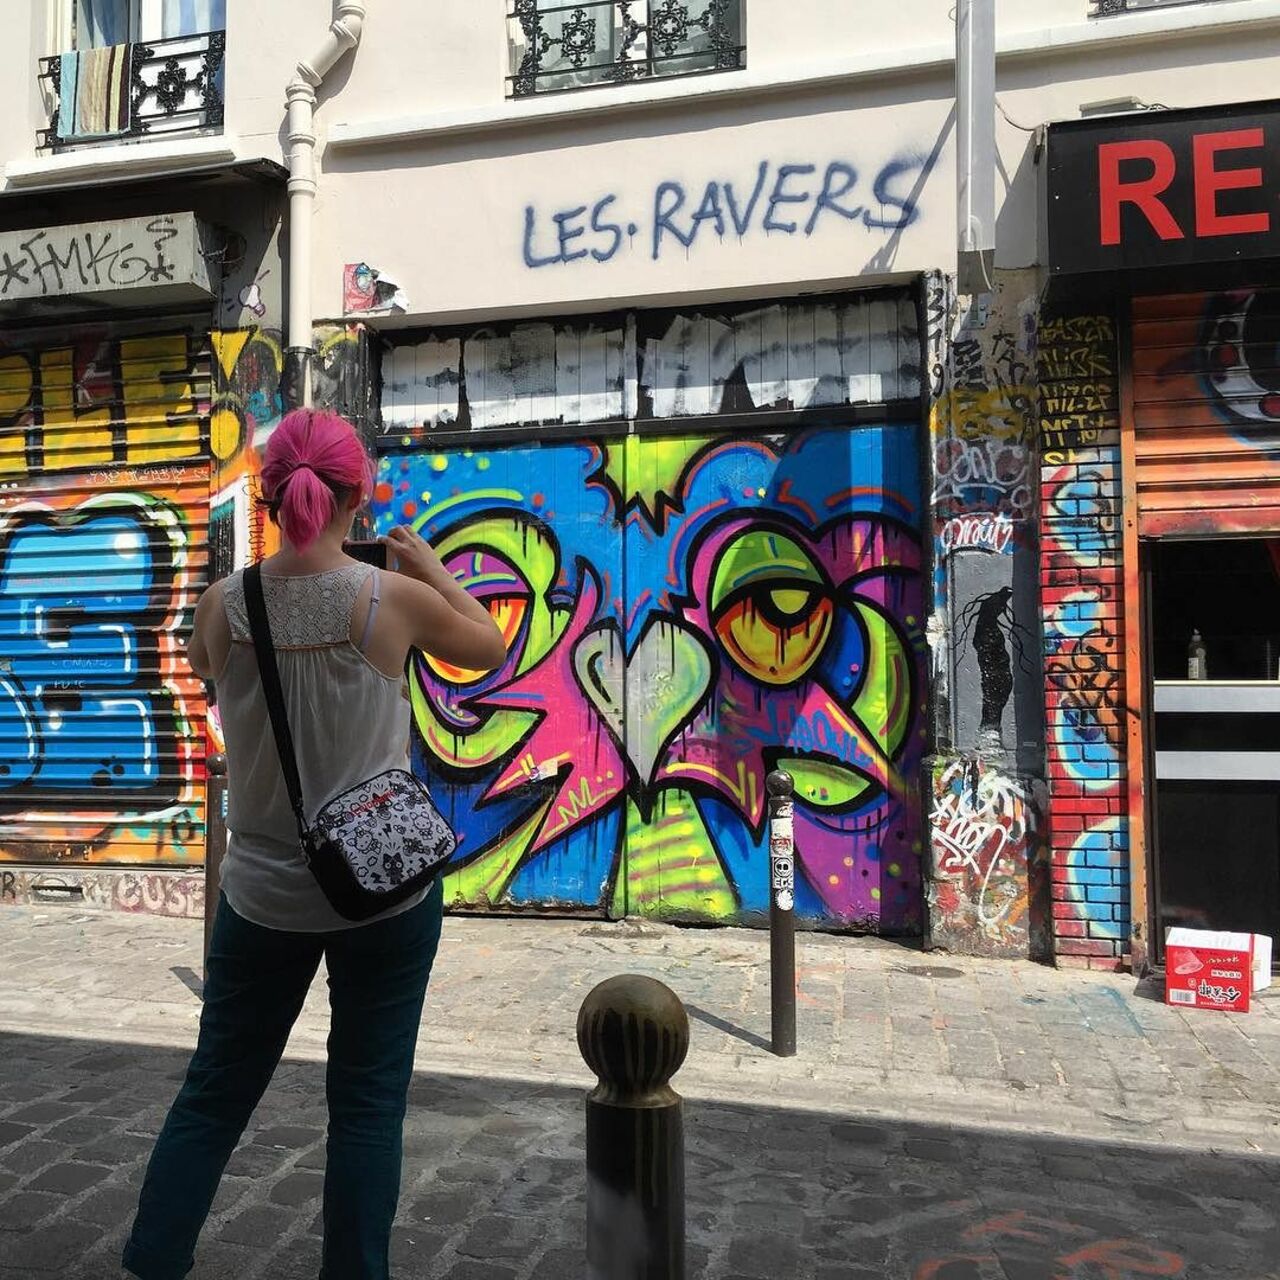 #Paris #graffiti photo by @zerokfe http://ift.tt/1jLvM2e #StreetArt https://t.co/9hAwidQXfE